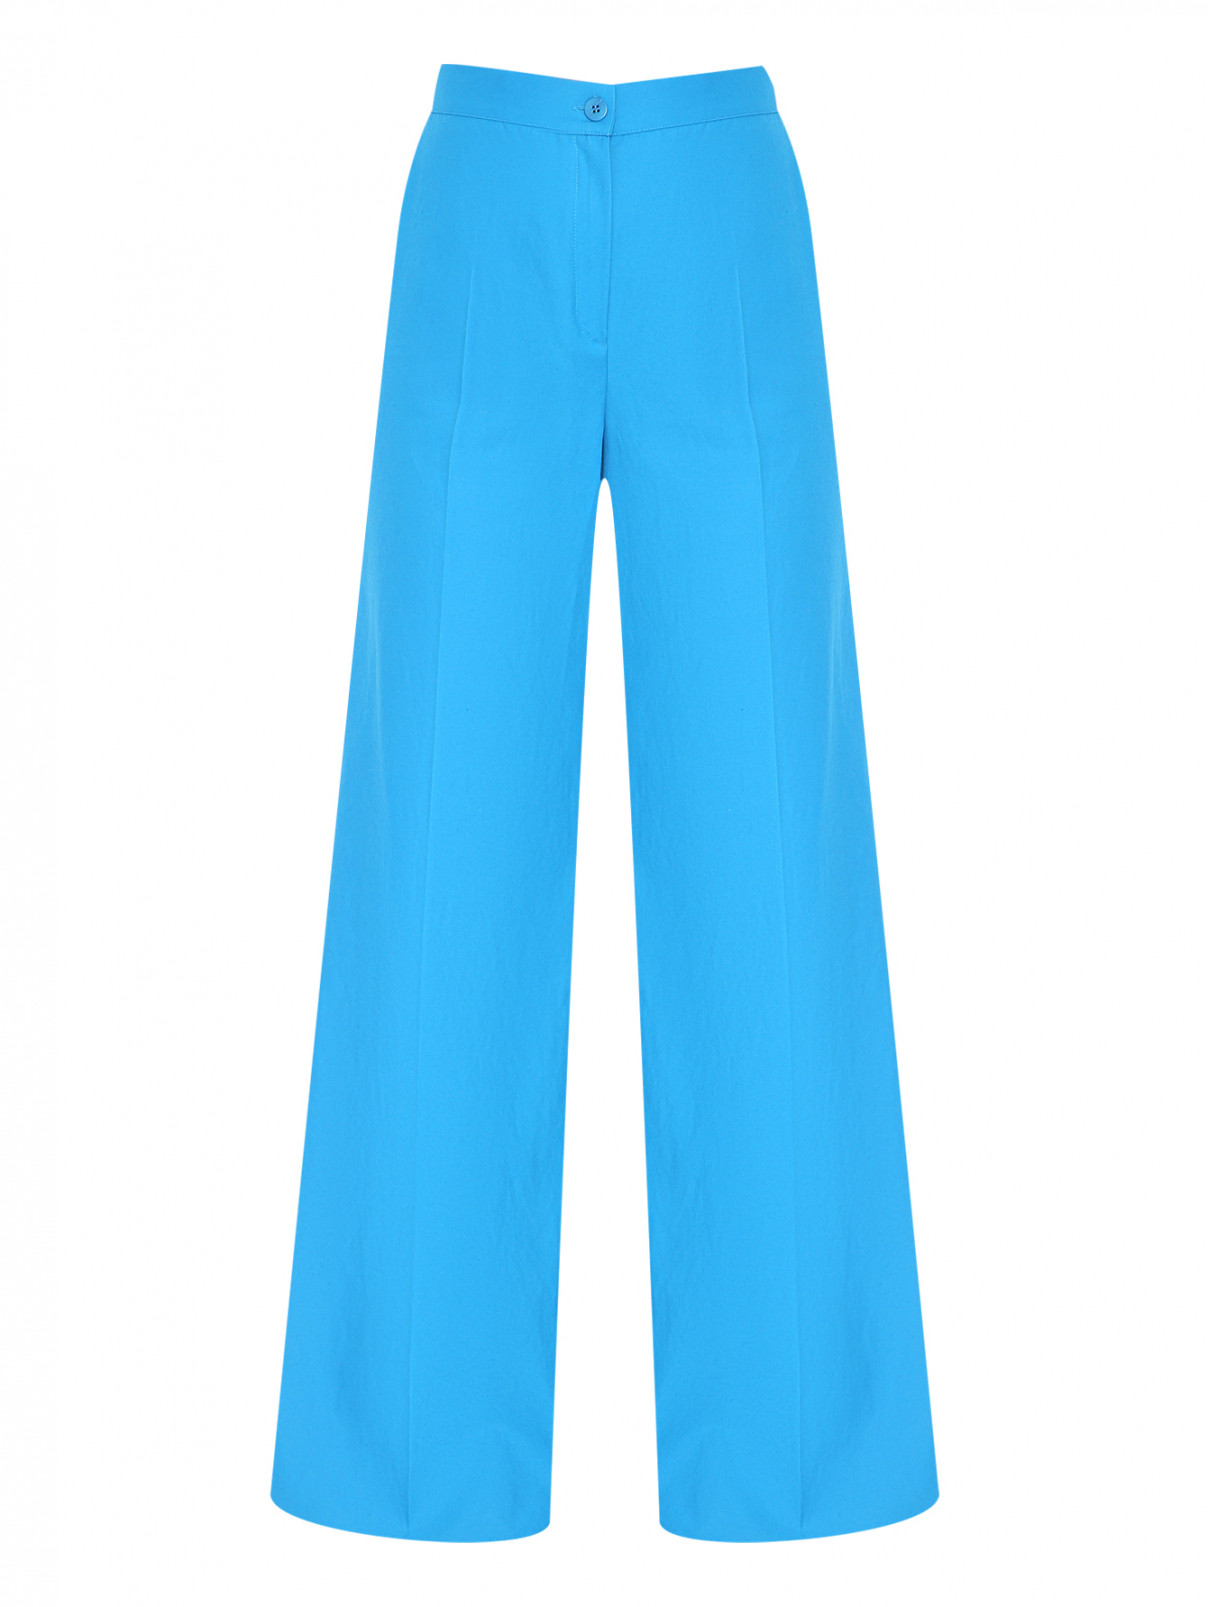 Широкие брюки с карманами Marina Rinaldi  –  Общий вид  – Цвет:  Синий